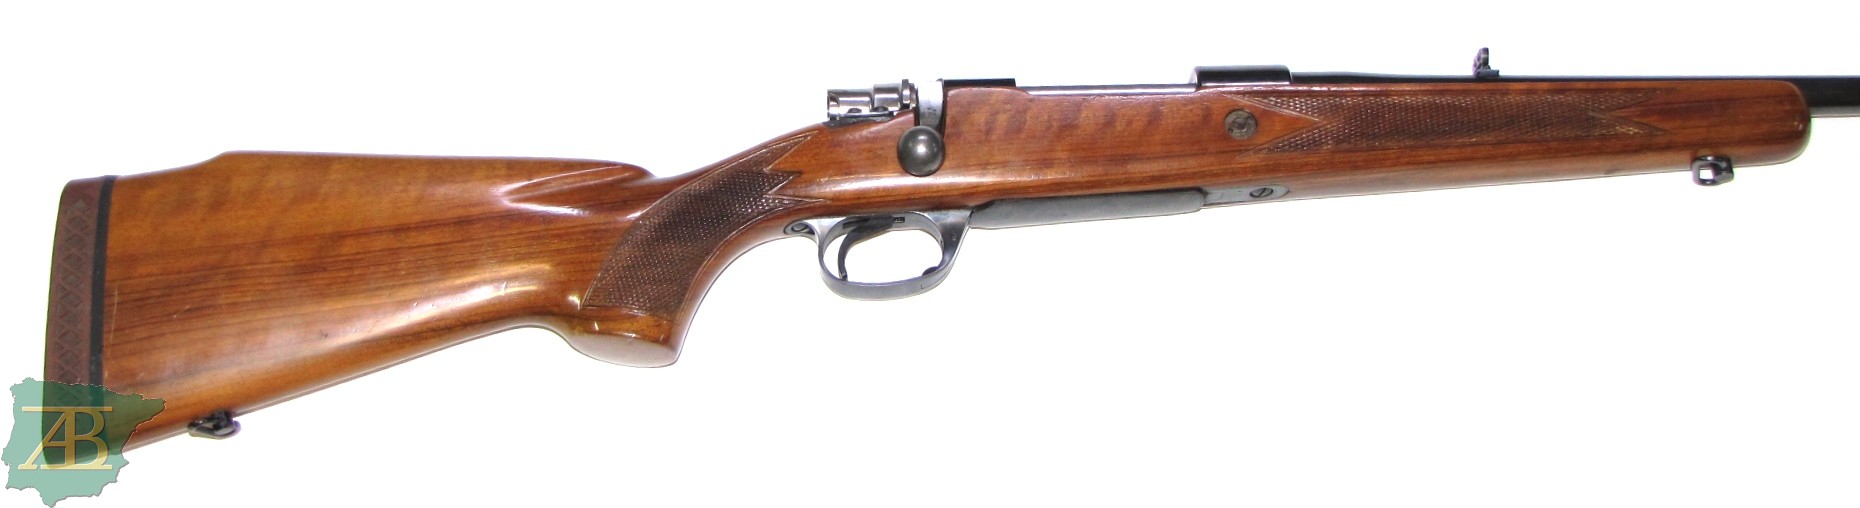 Rifle de cerrojo de caza SANTA BÁRBARA DE LUXE Ref 7883-armeriaiberica-2